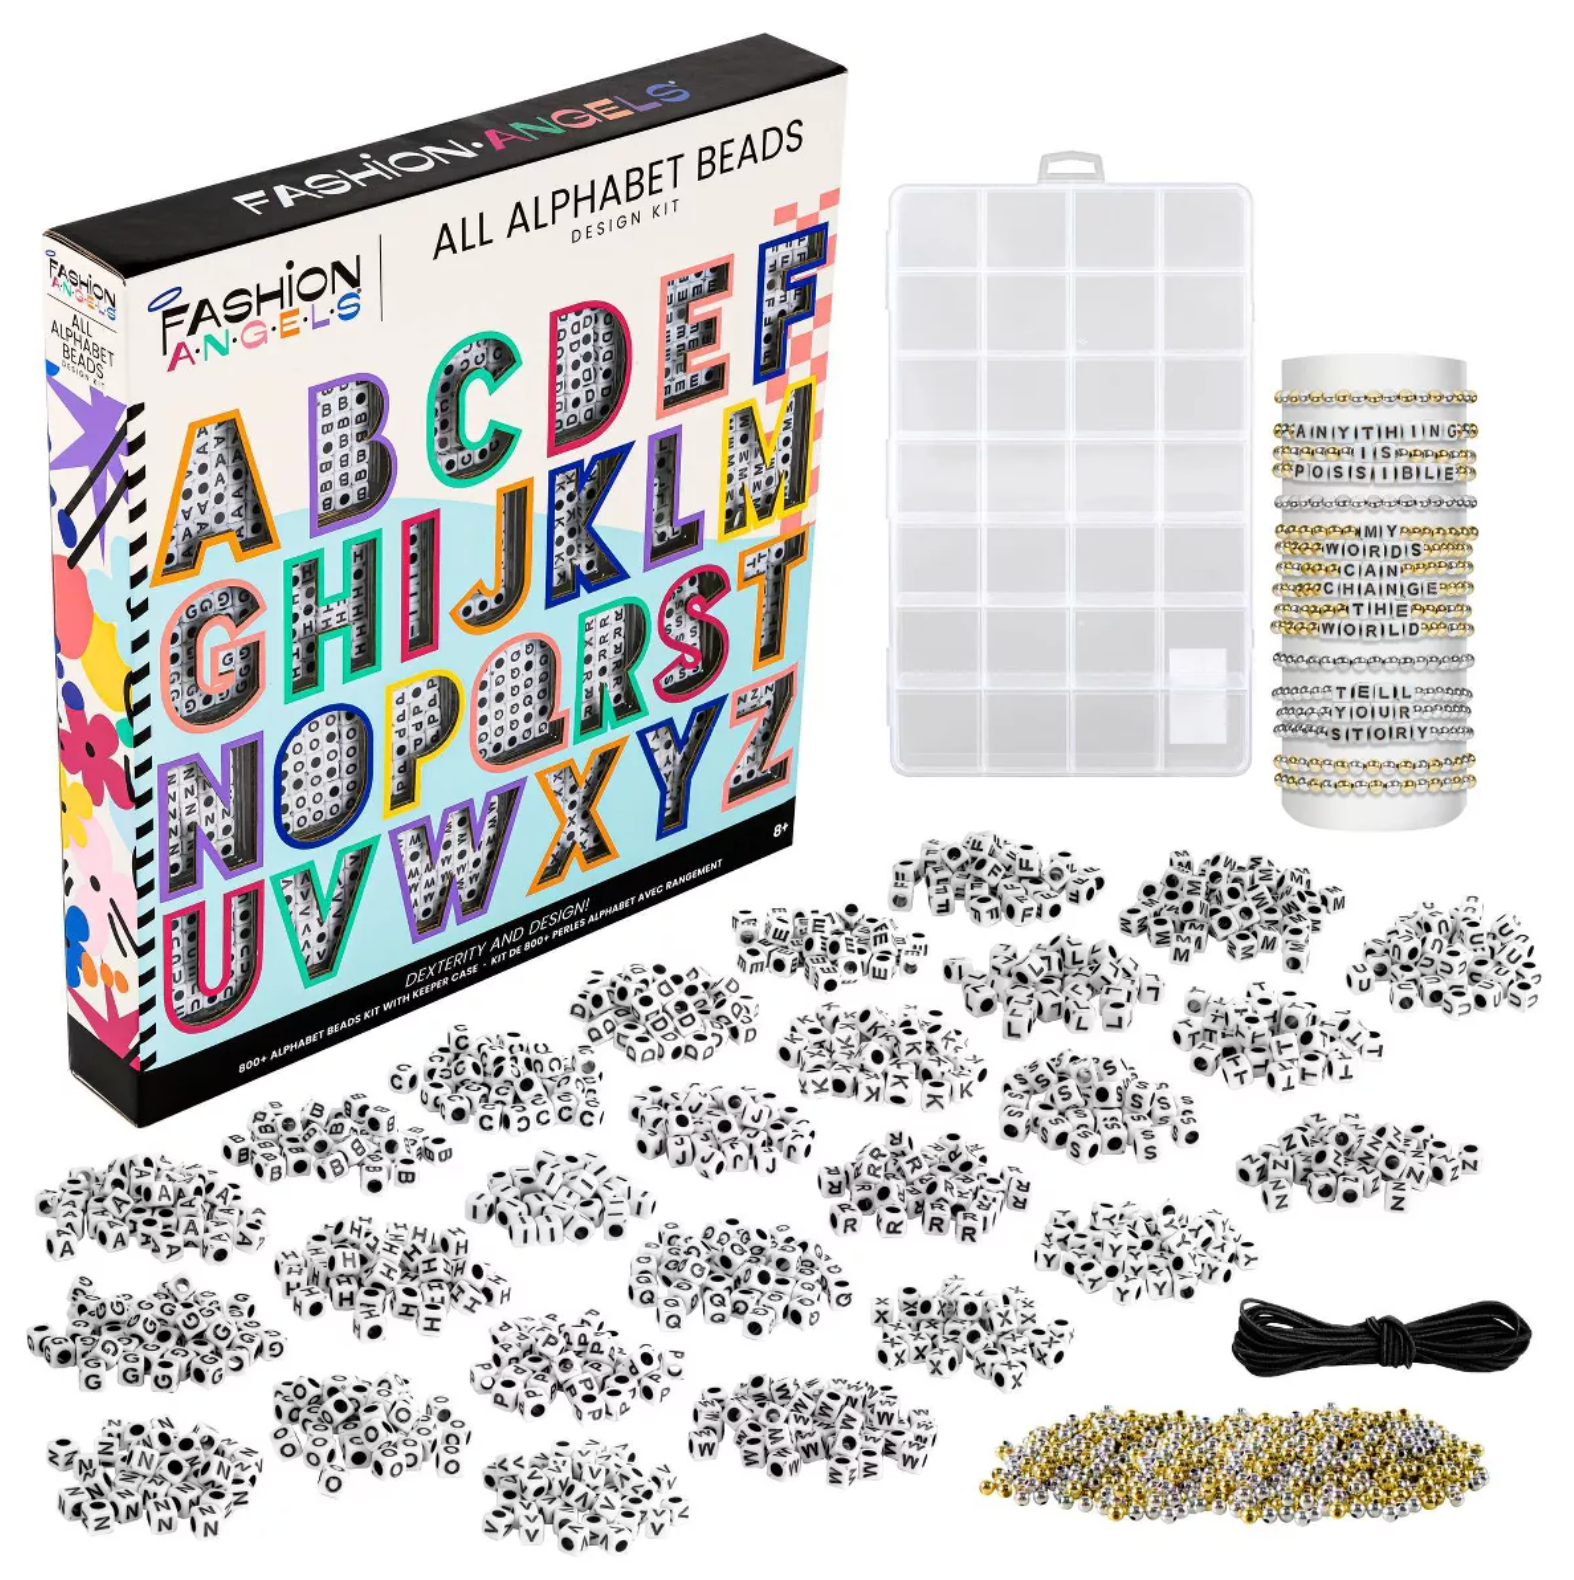 Fashion Angels All Alphabet Beads Design Kit